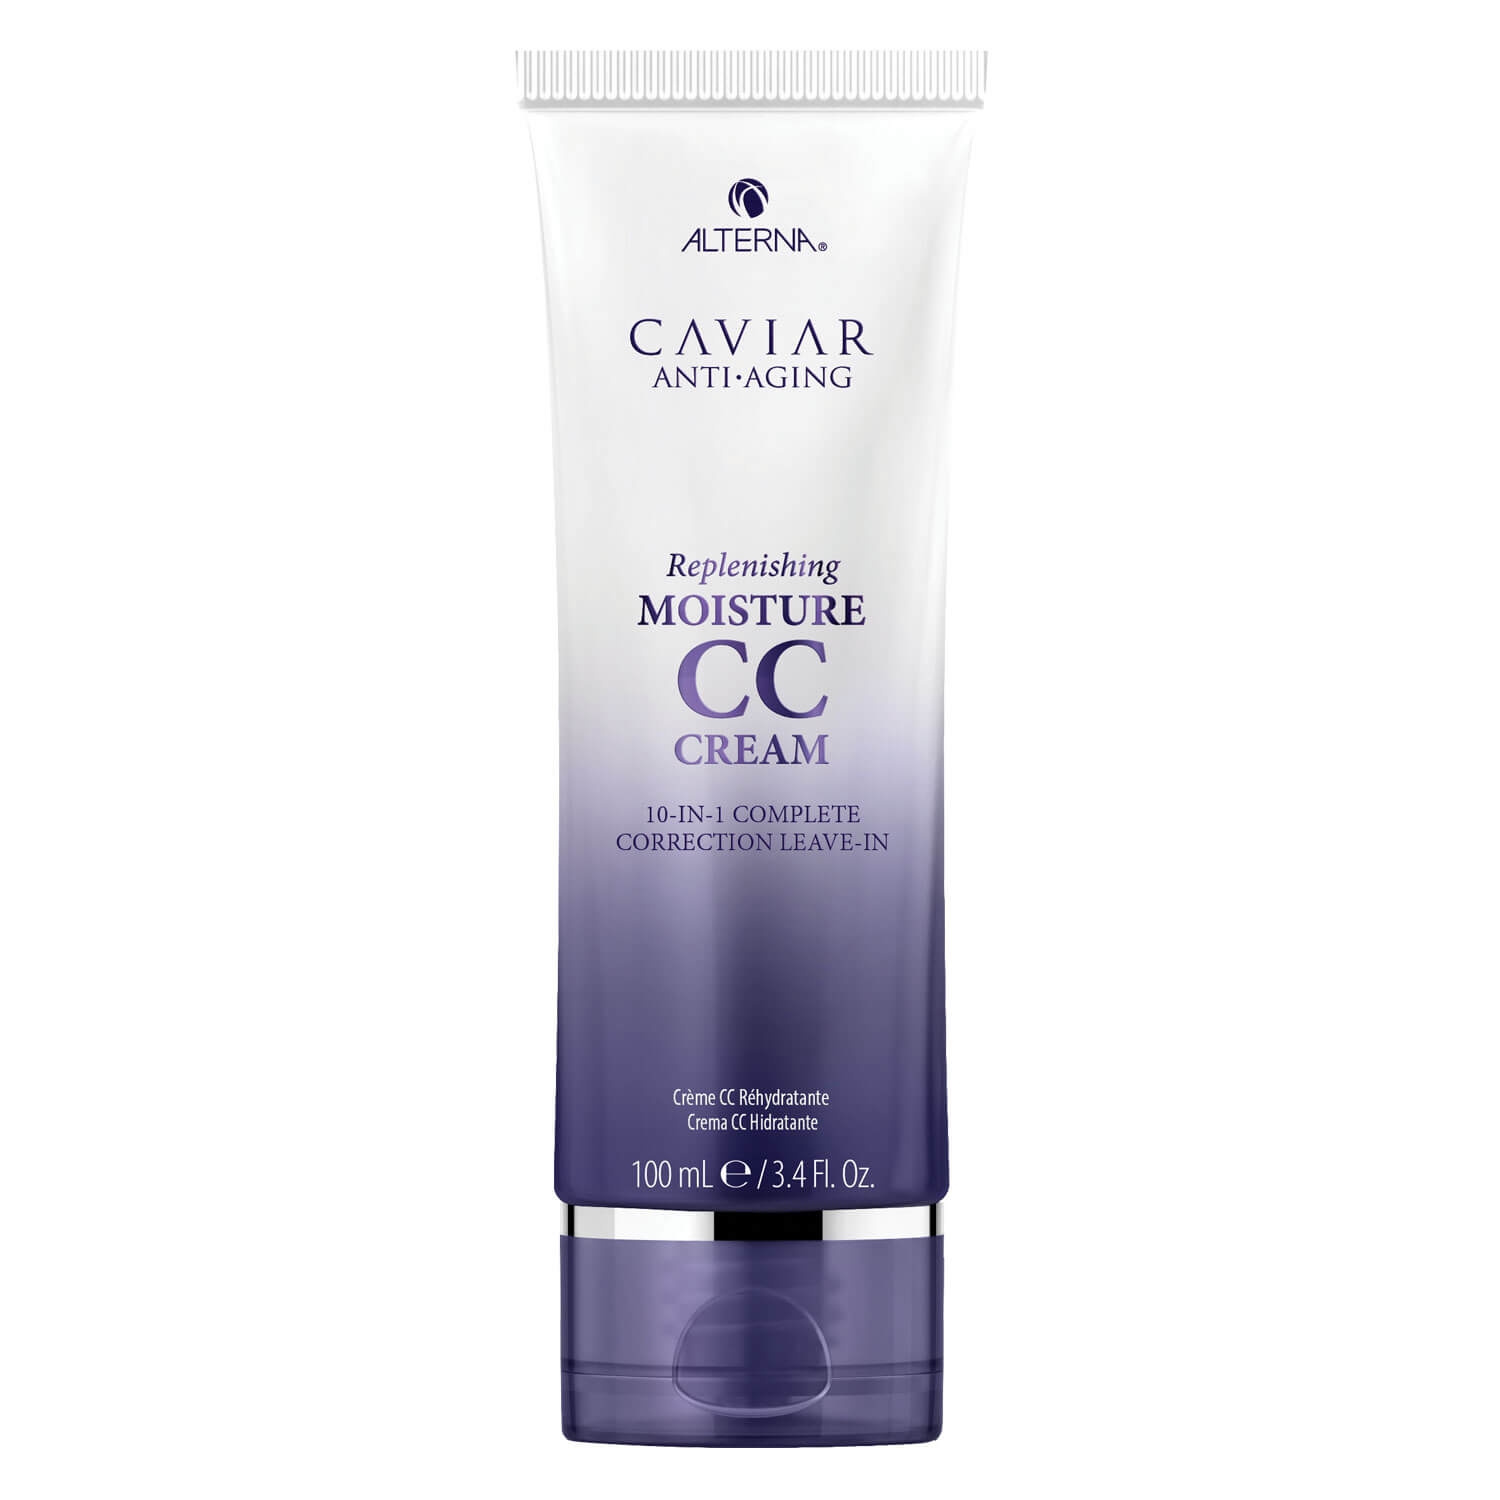 Produktbild von Caviar Anti Aging - Replenishing Moisture CC Cream